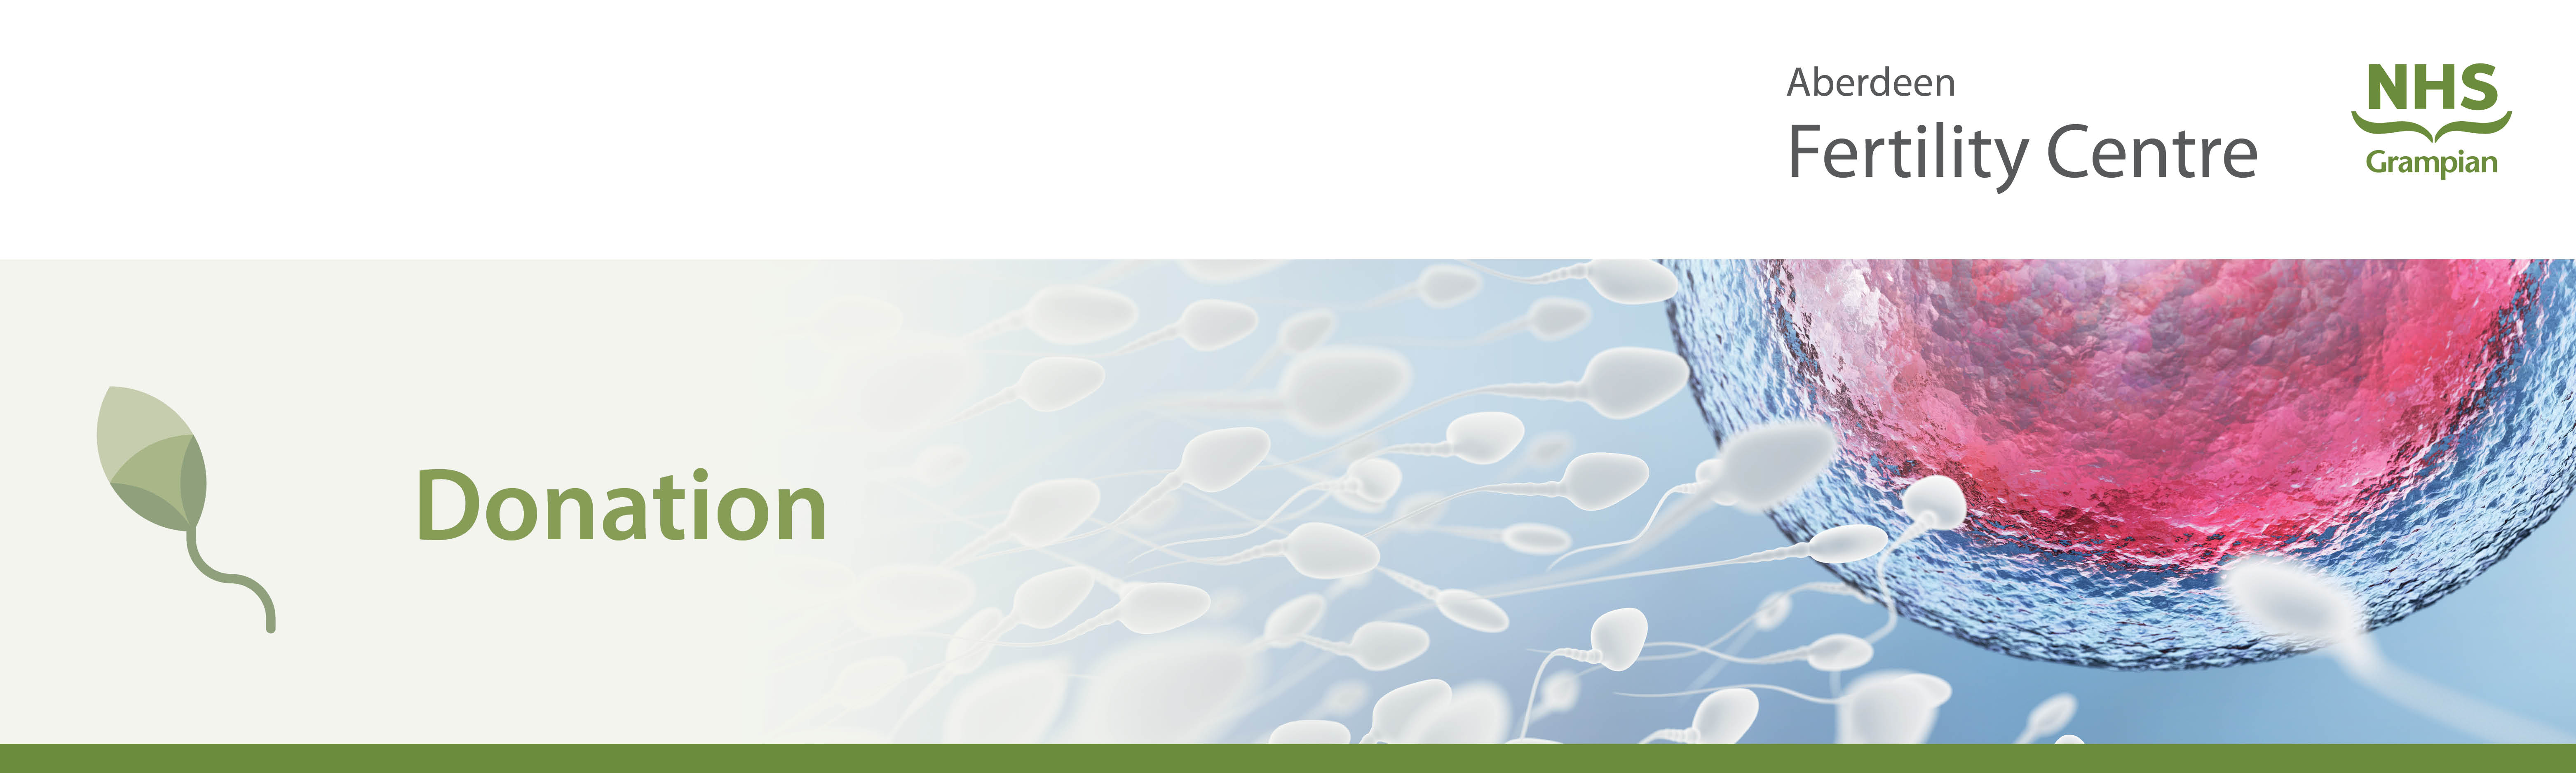 Aberdeen Fertility Centre Donation Page Banner